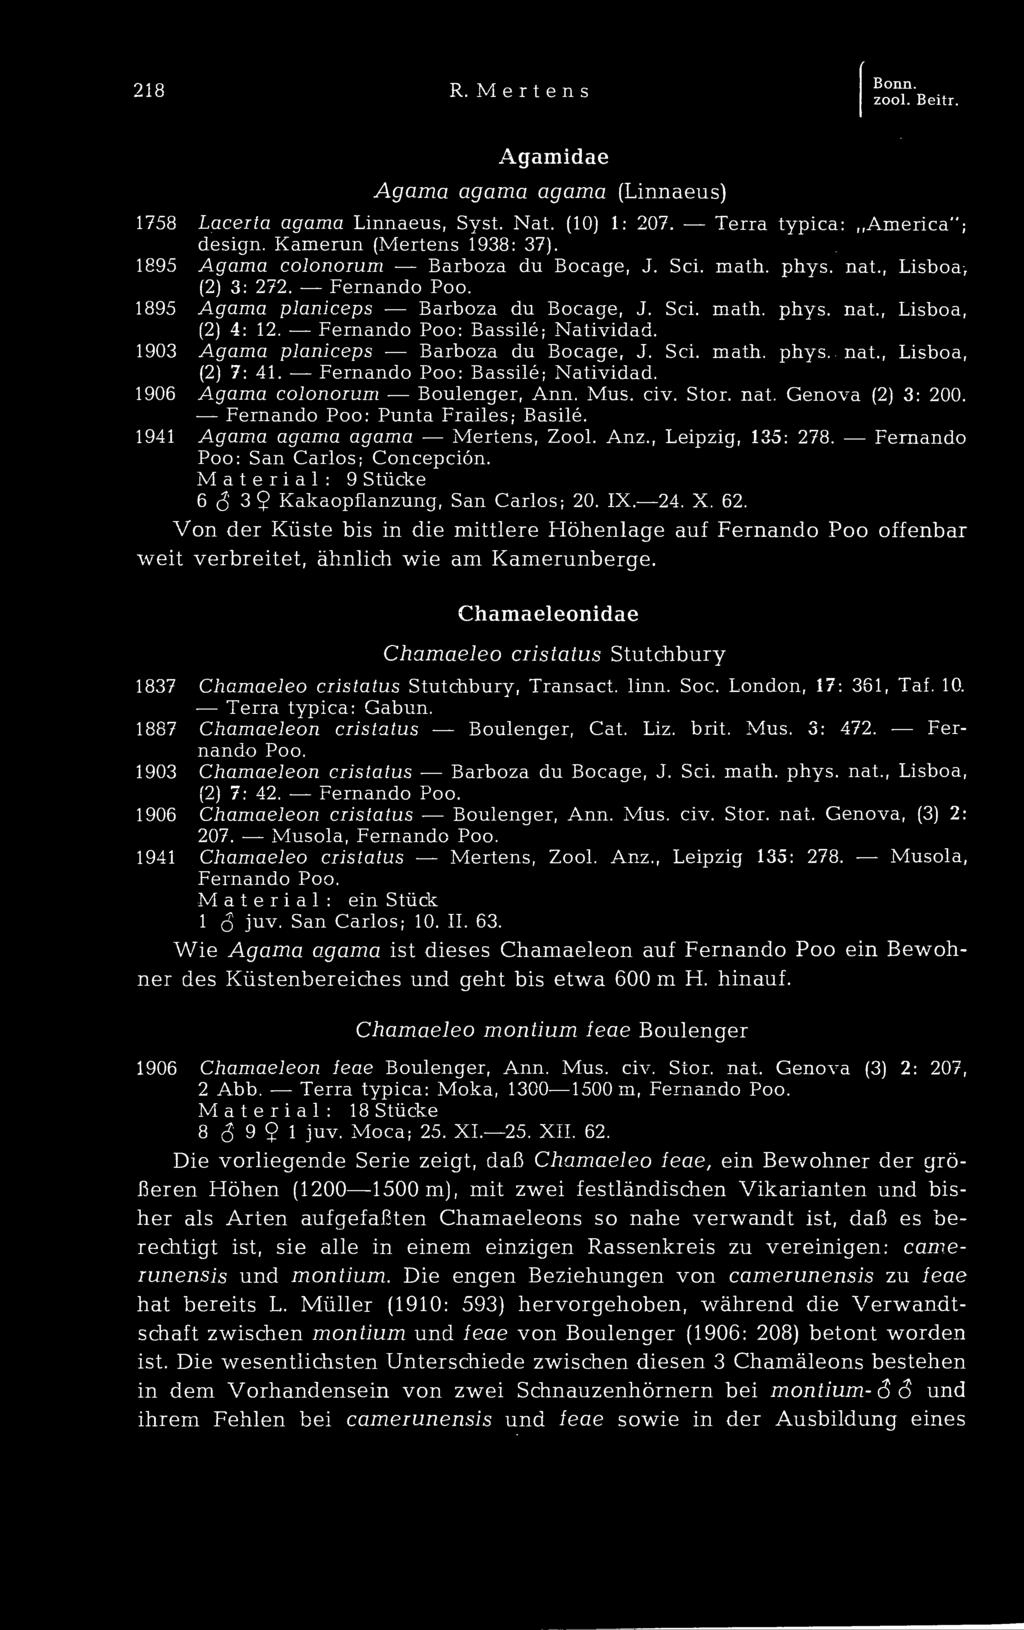 Fernando Poo: Bassilé; Natividad. 1903 Agama planiceps Barboza du Bocage, J. Sei. math. phvs. nat., Lisboa, (2) 7: 41. Fernando Poo: Bassilé; Natividad. 1906 Agama colonorum Boulenger, Ann. Mus. civ.